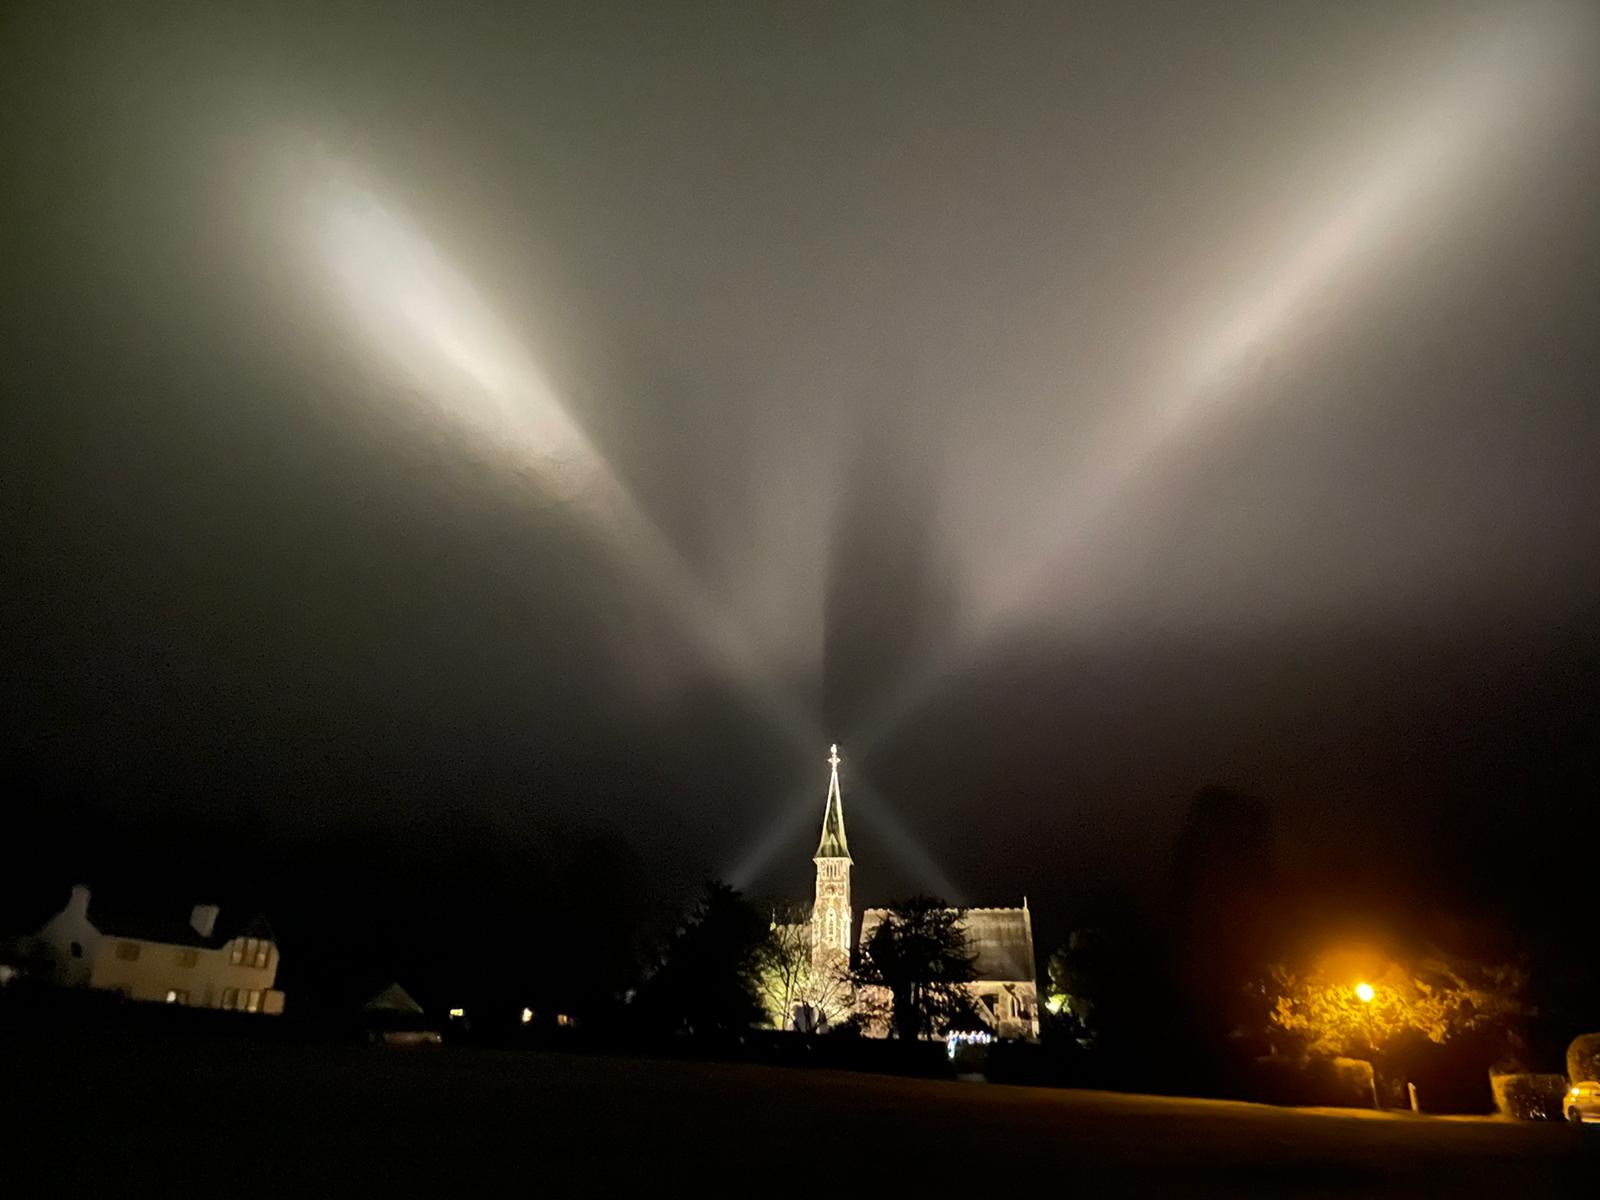 Ide Hill church on a misty night